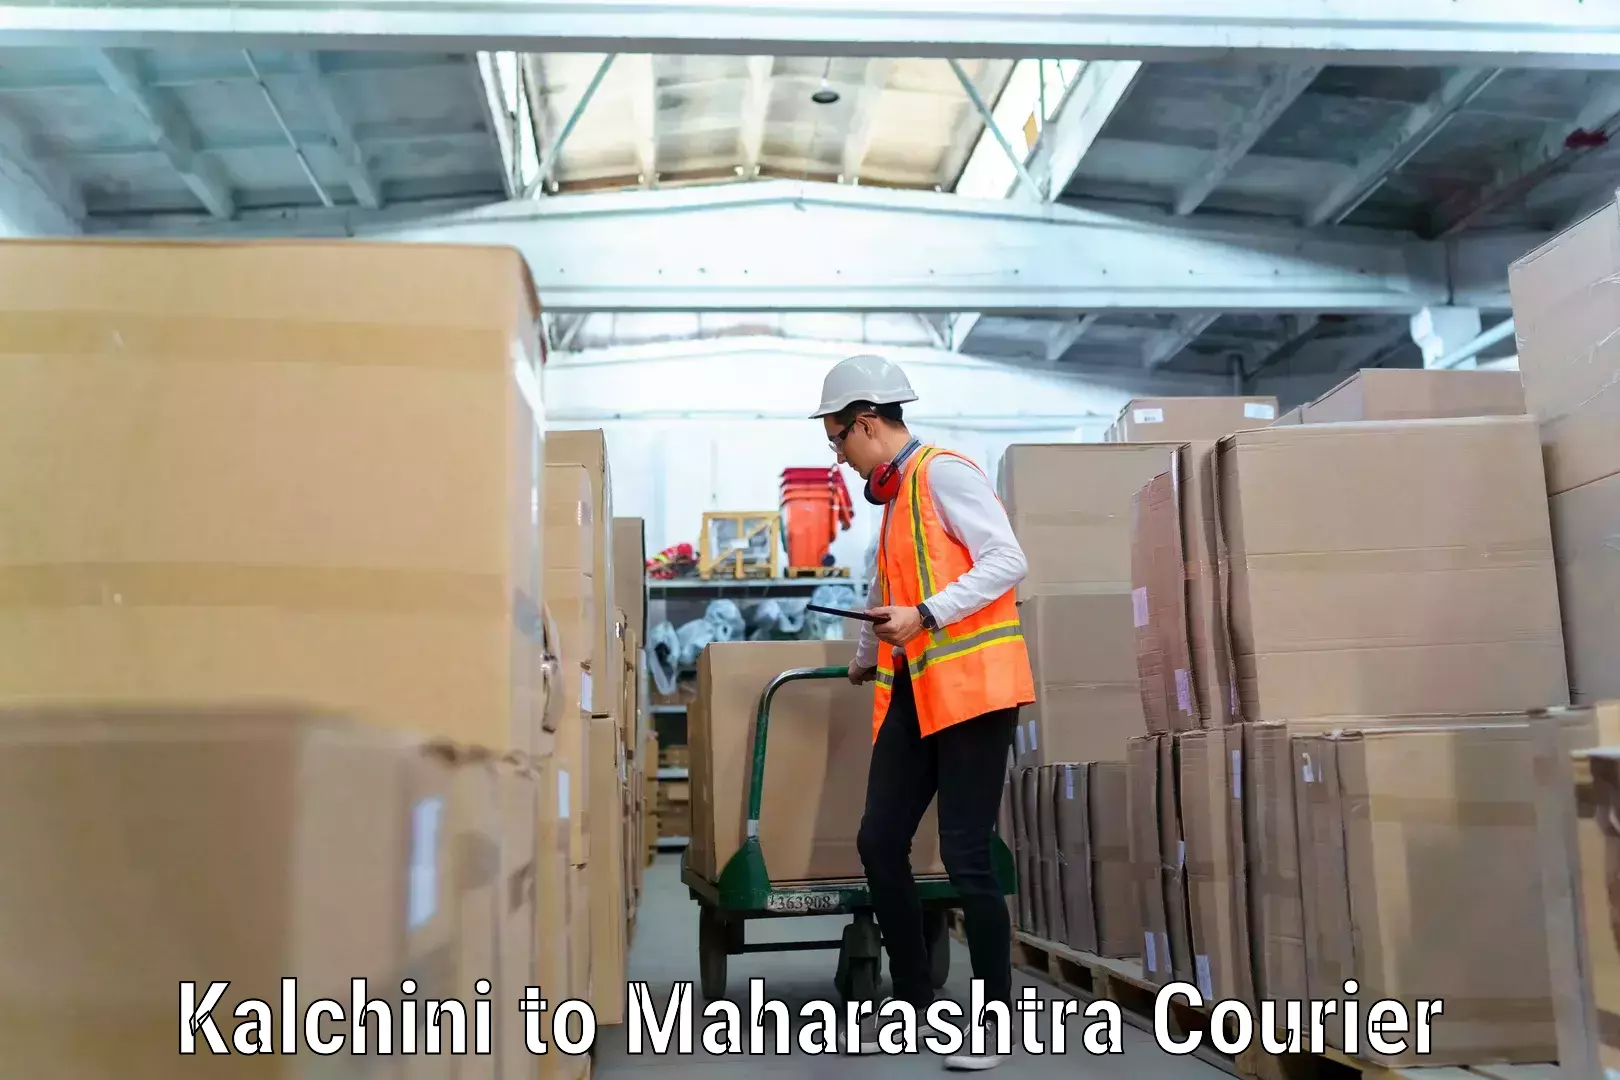 Professional home movers Kalchini to Maharashtra